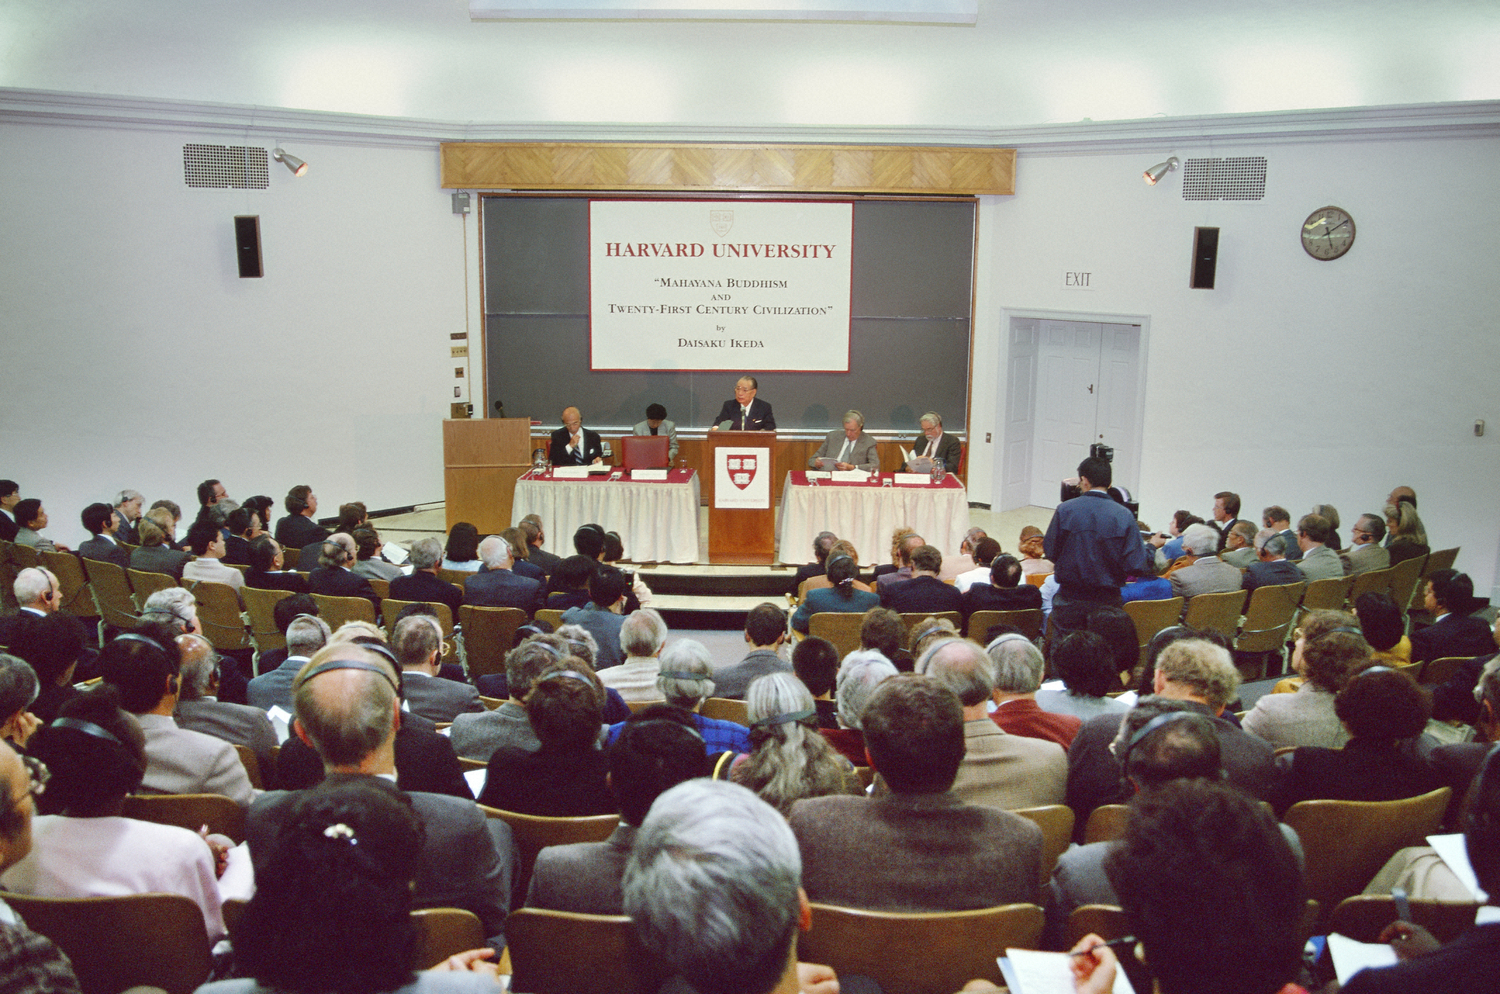 Ikeda lecturing on "Mahayana Buddhism and Twenty-first Century Civilization" at Harvard University